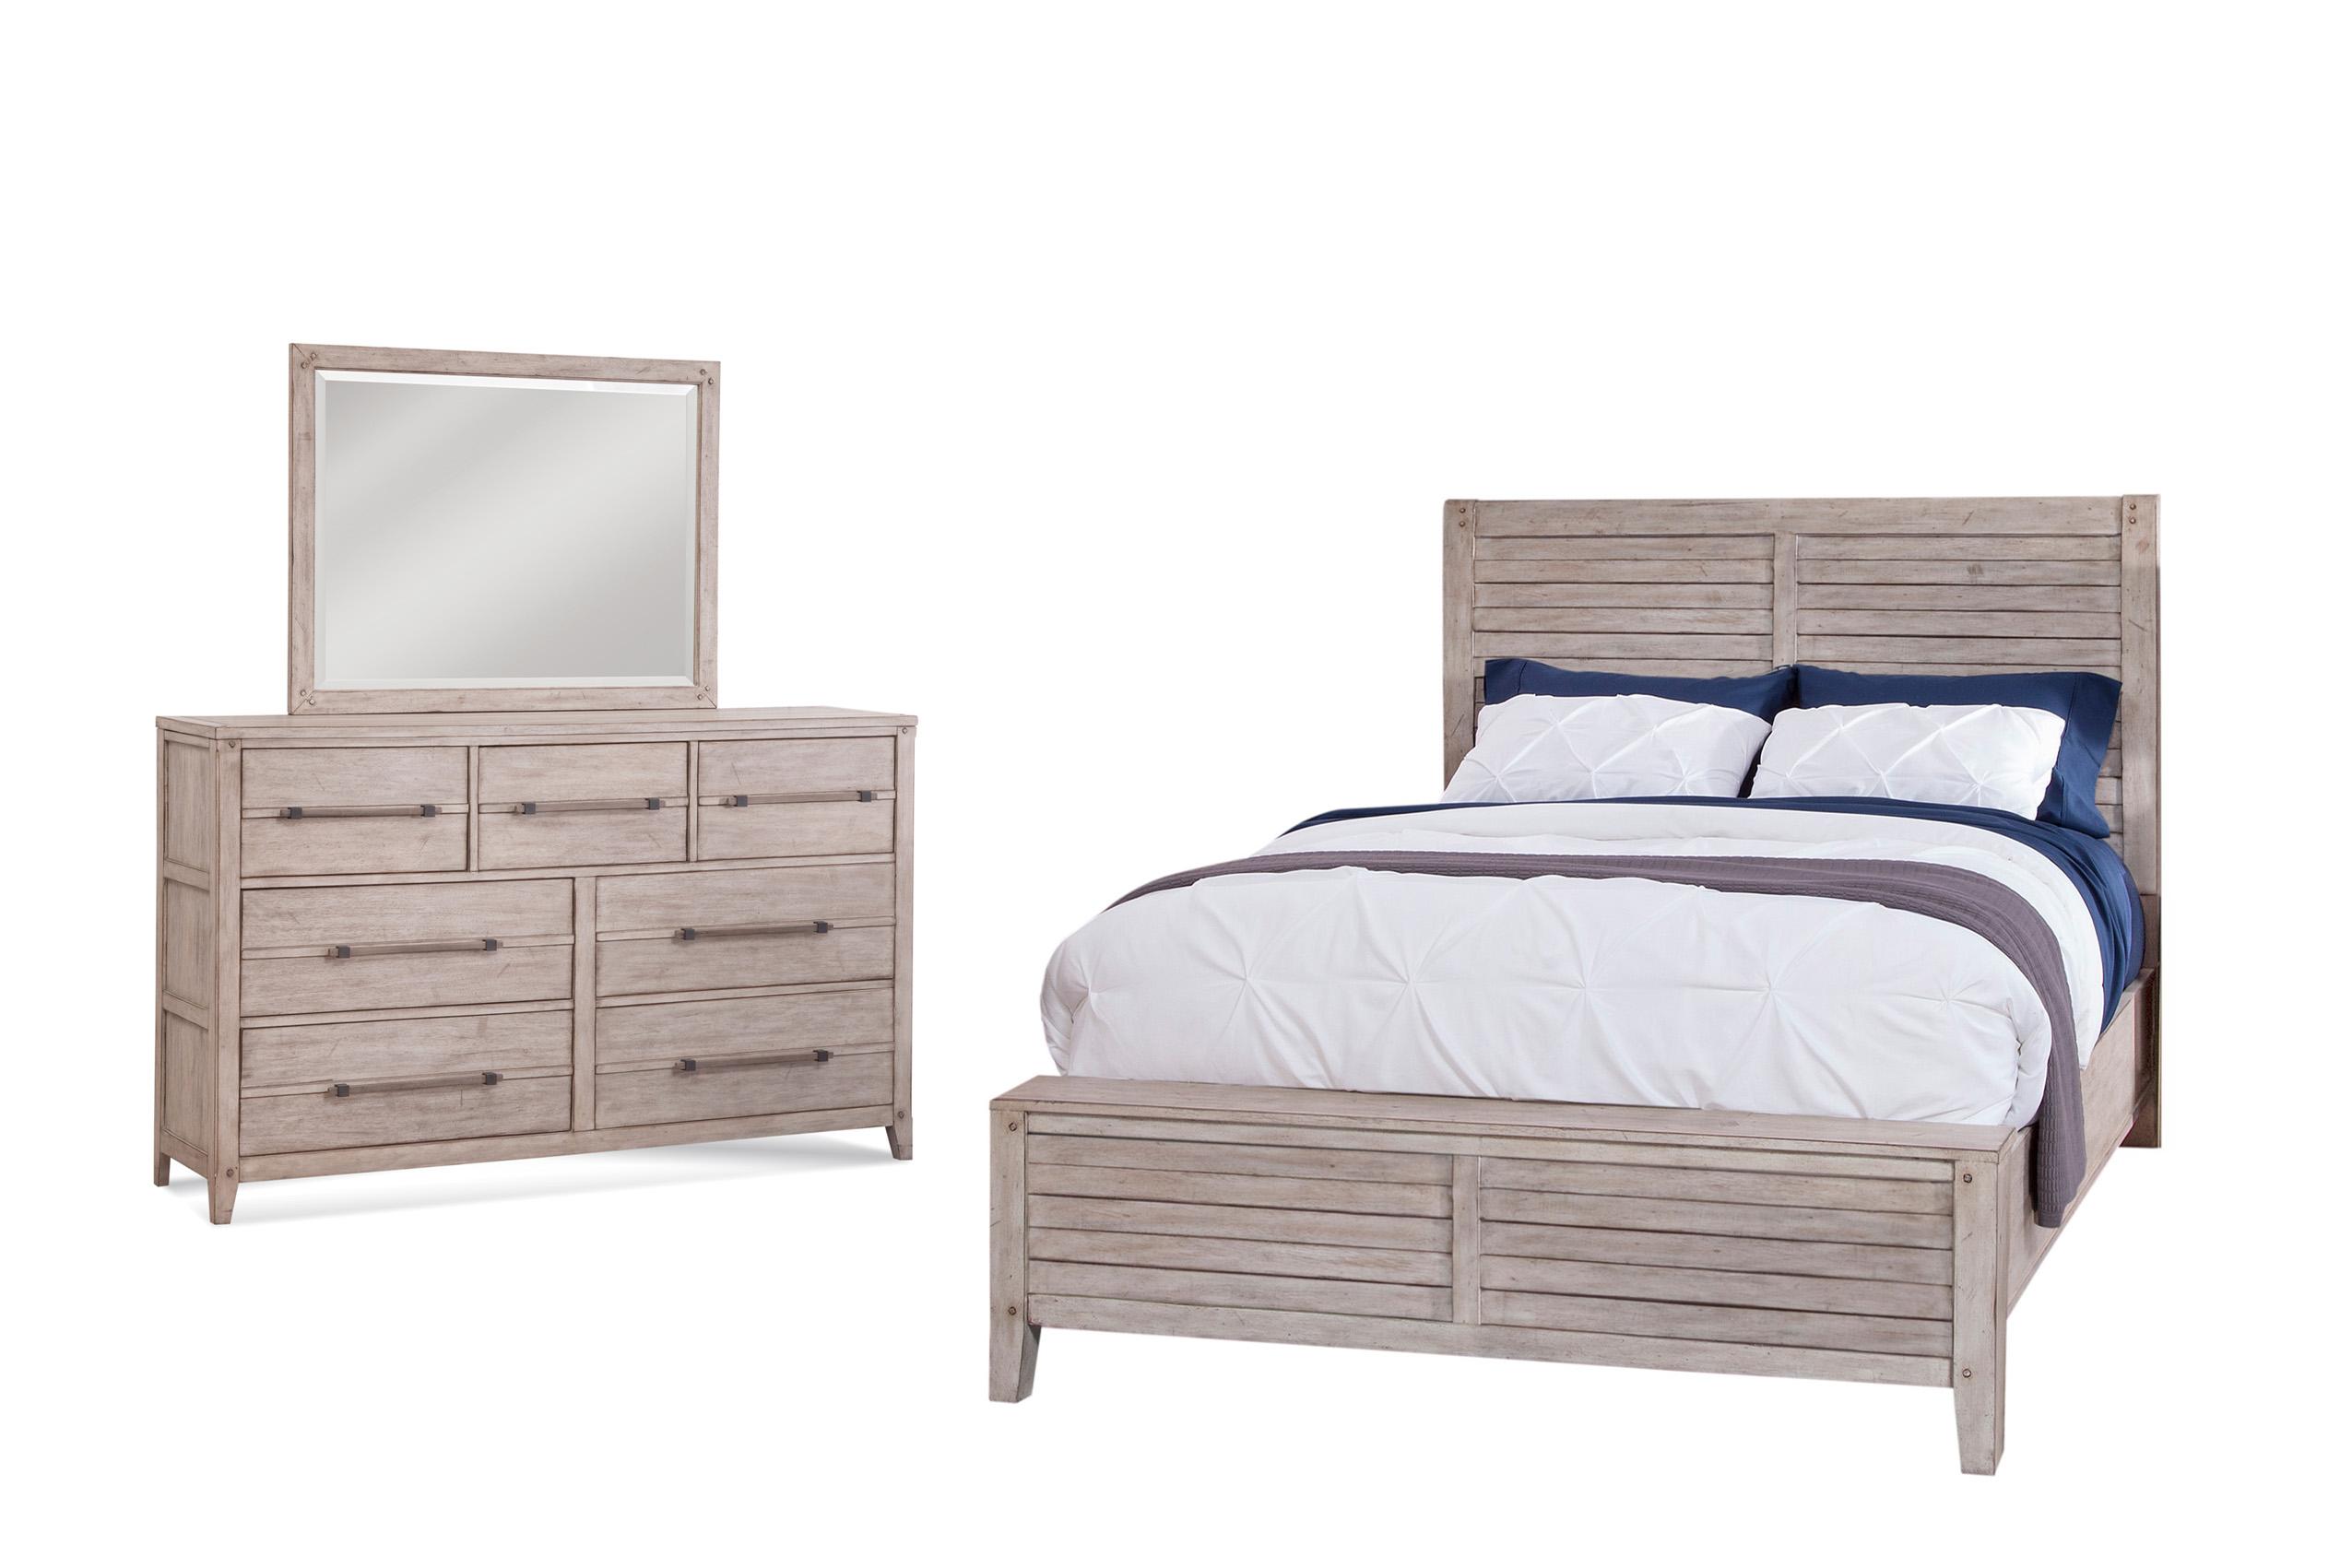 Classic, Traditional Panel Bedroom Set AURORA 2810-50PAN 2810-QPNPN-3PC in whitewash 